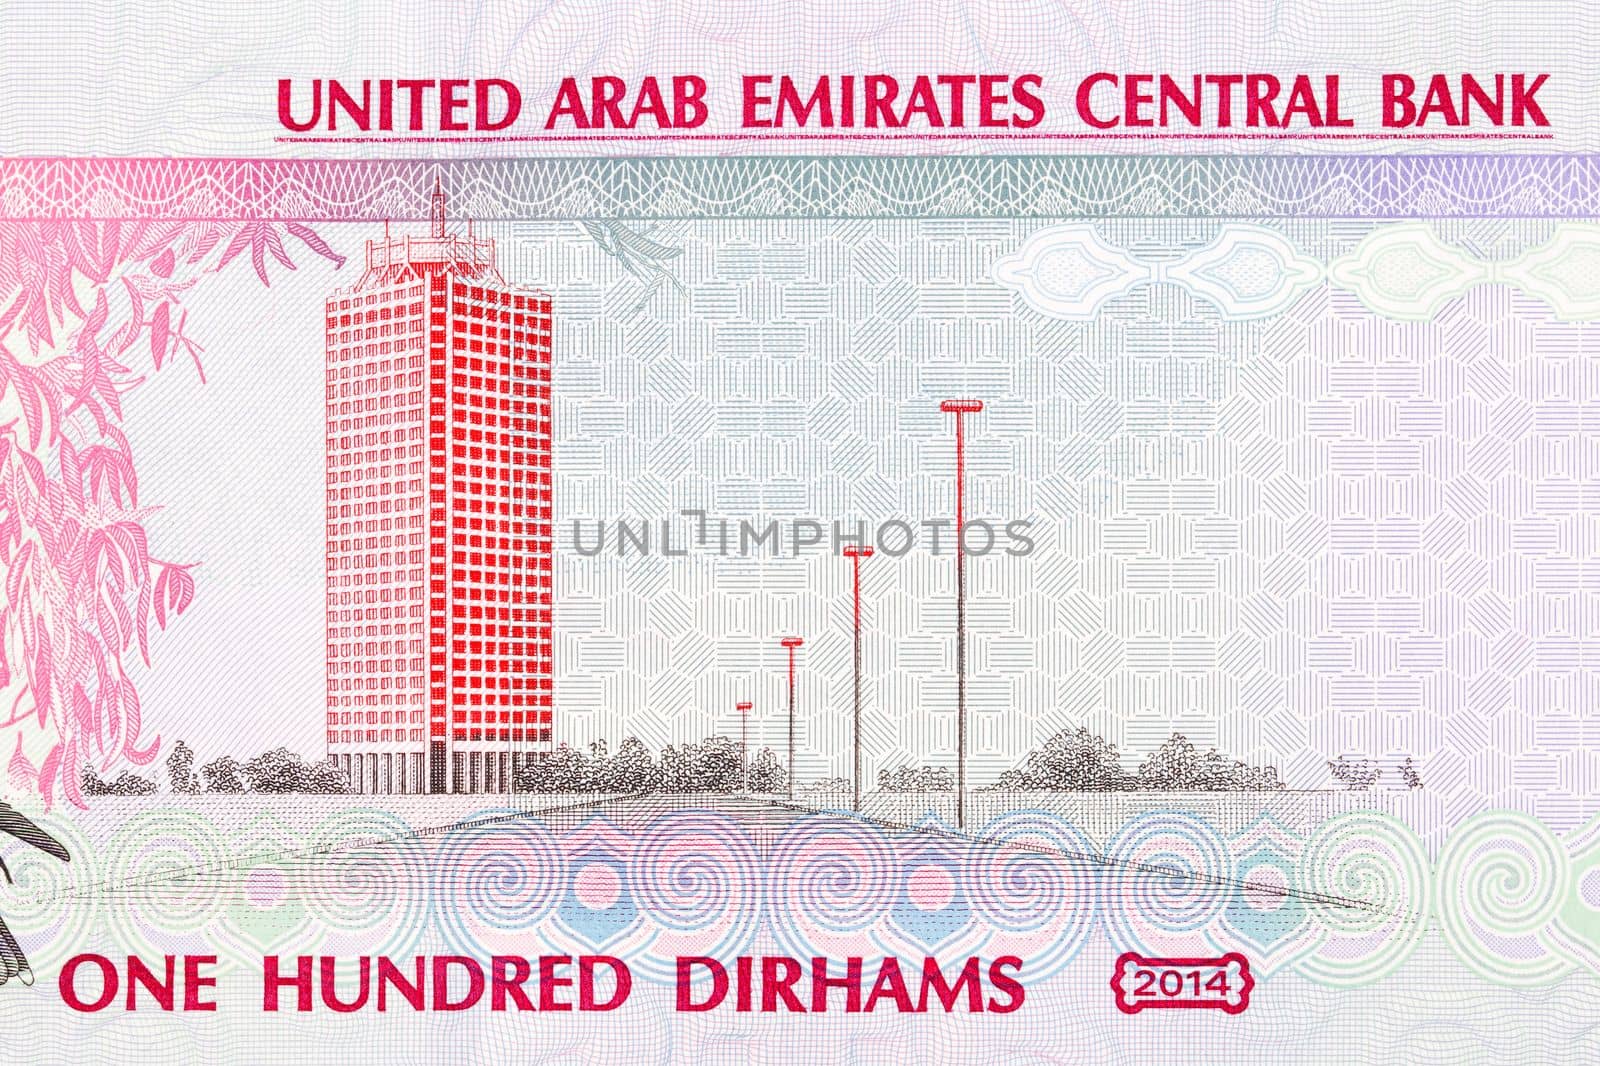 Dubai Shopping Centre from United Arab Emirates money - Dirham